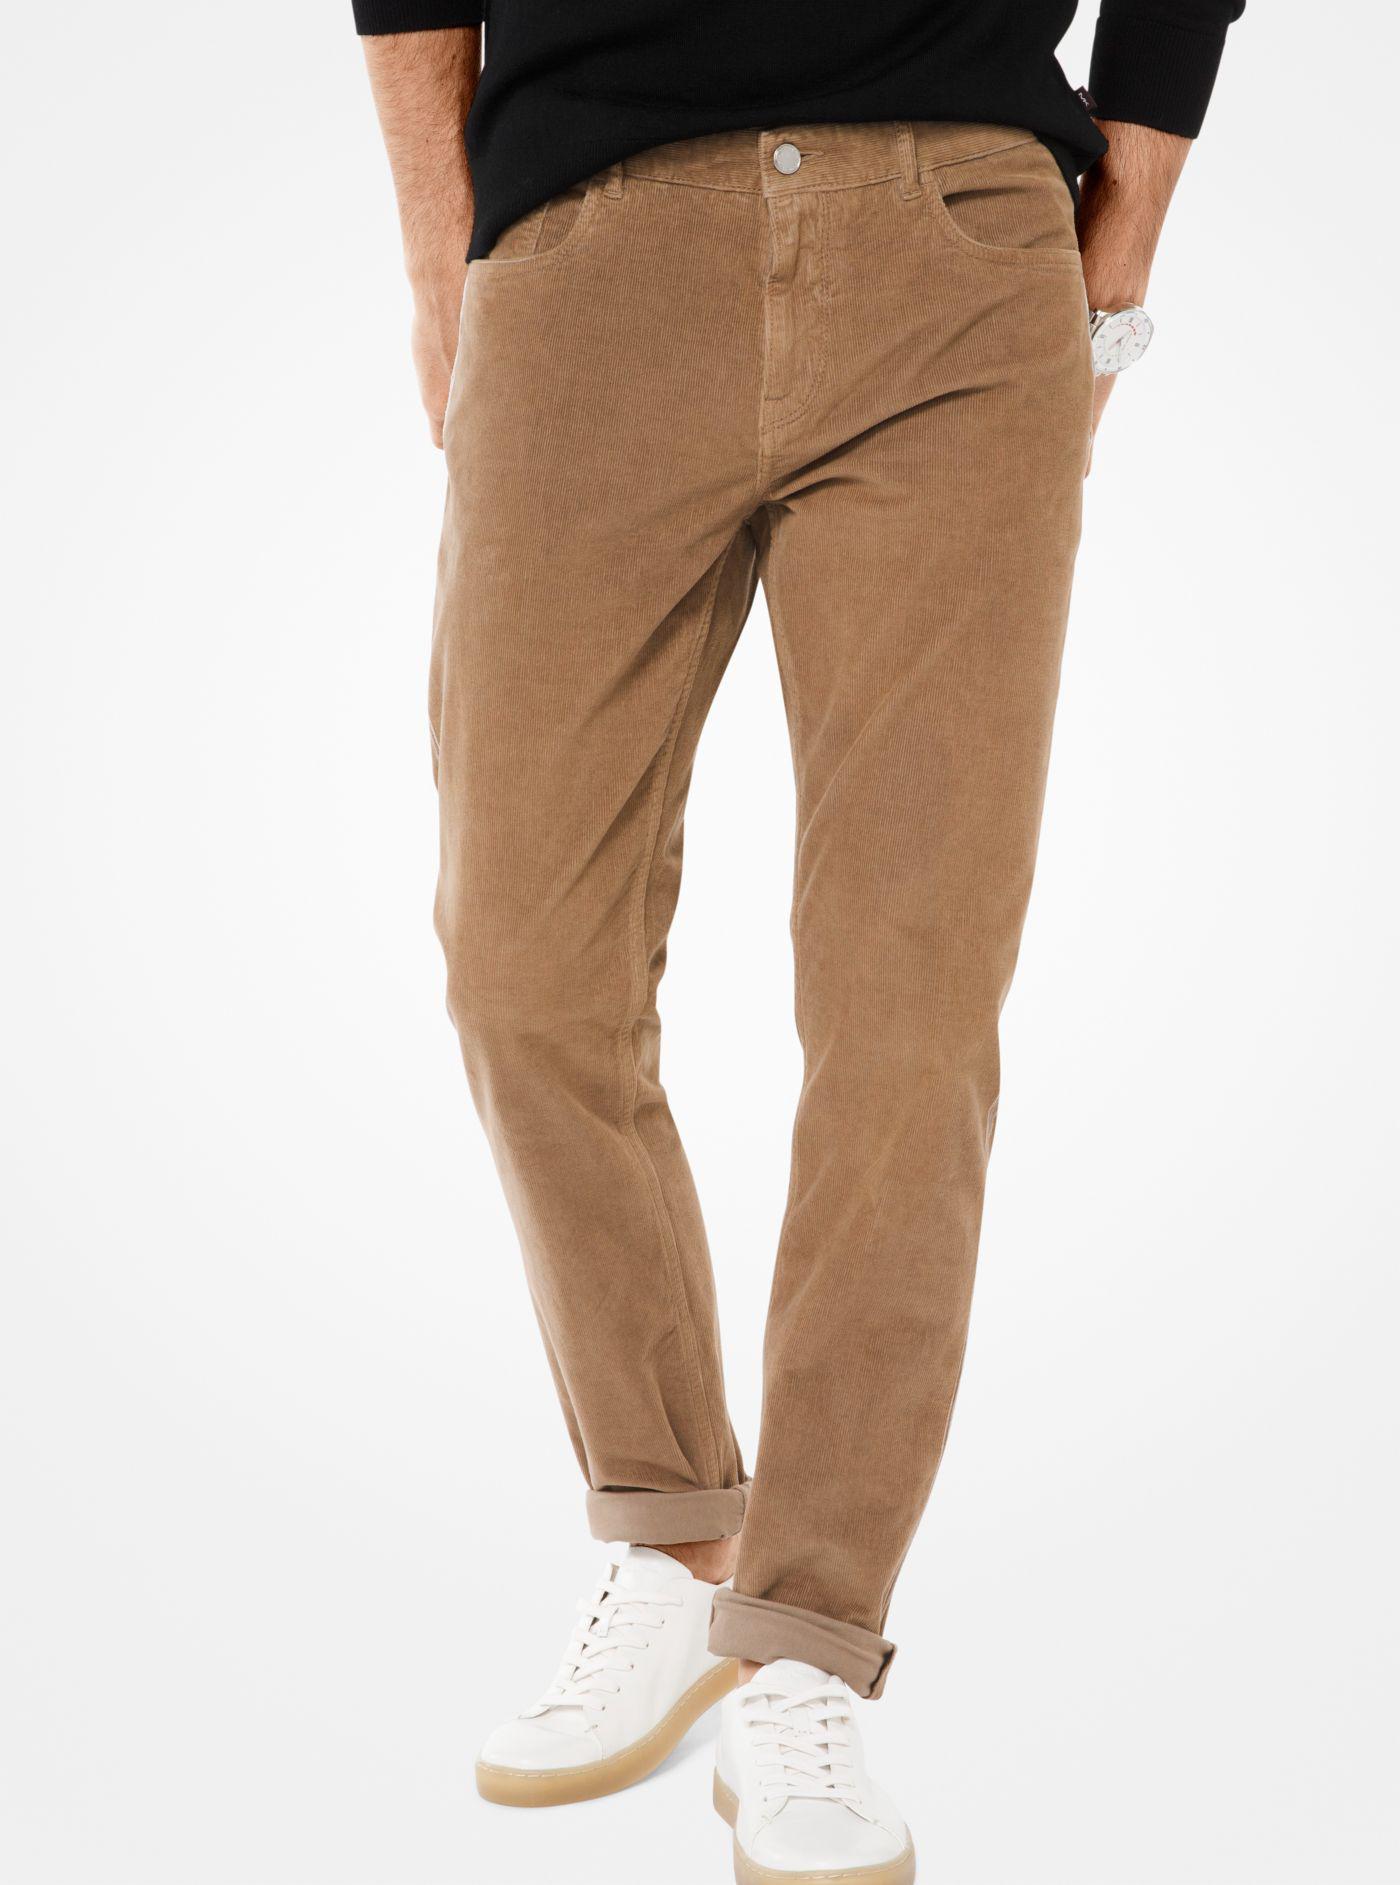 michael kors brown pants